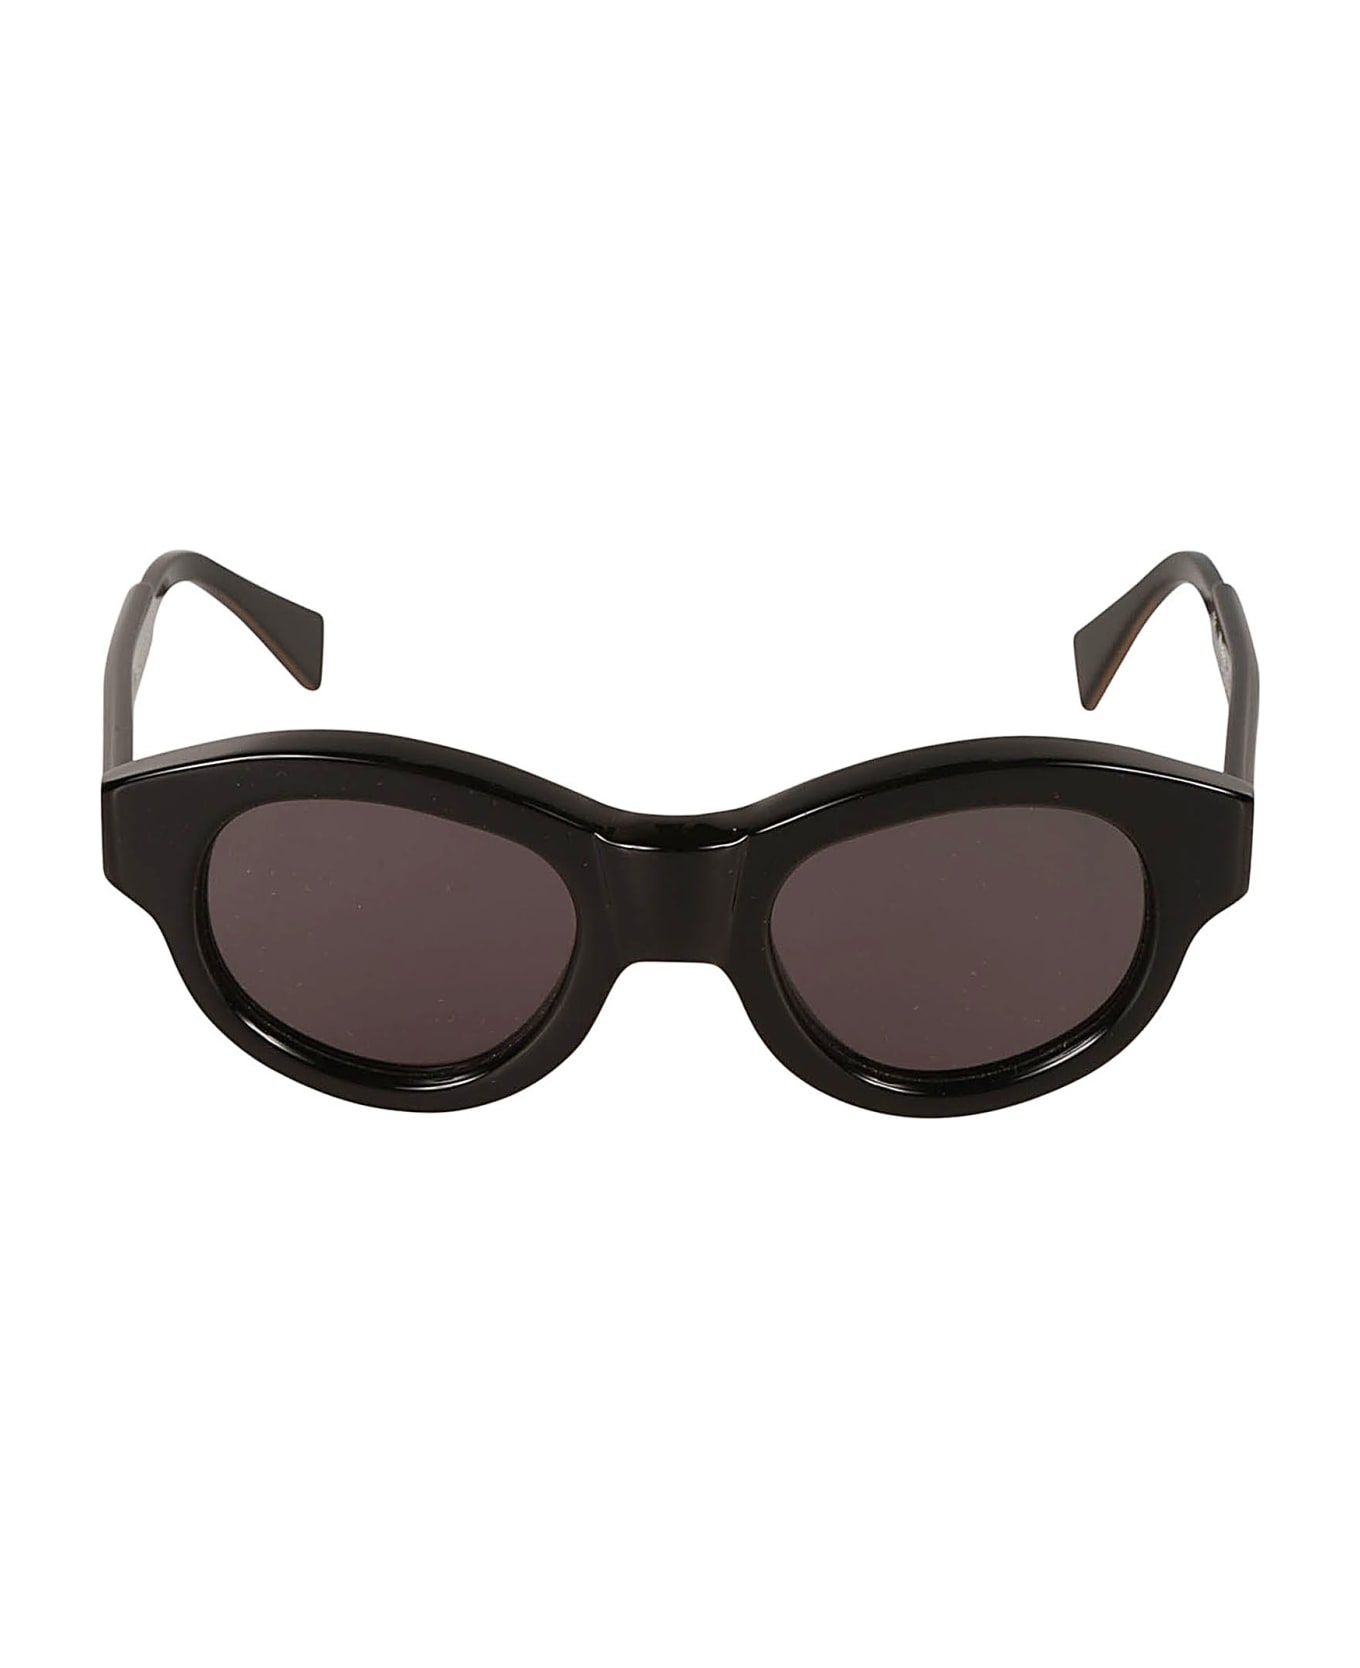 Kuboraum L2 Sunglasses Sunglasses - black